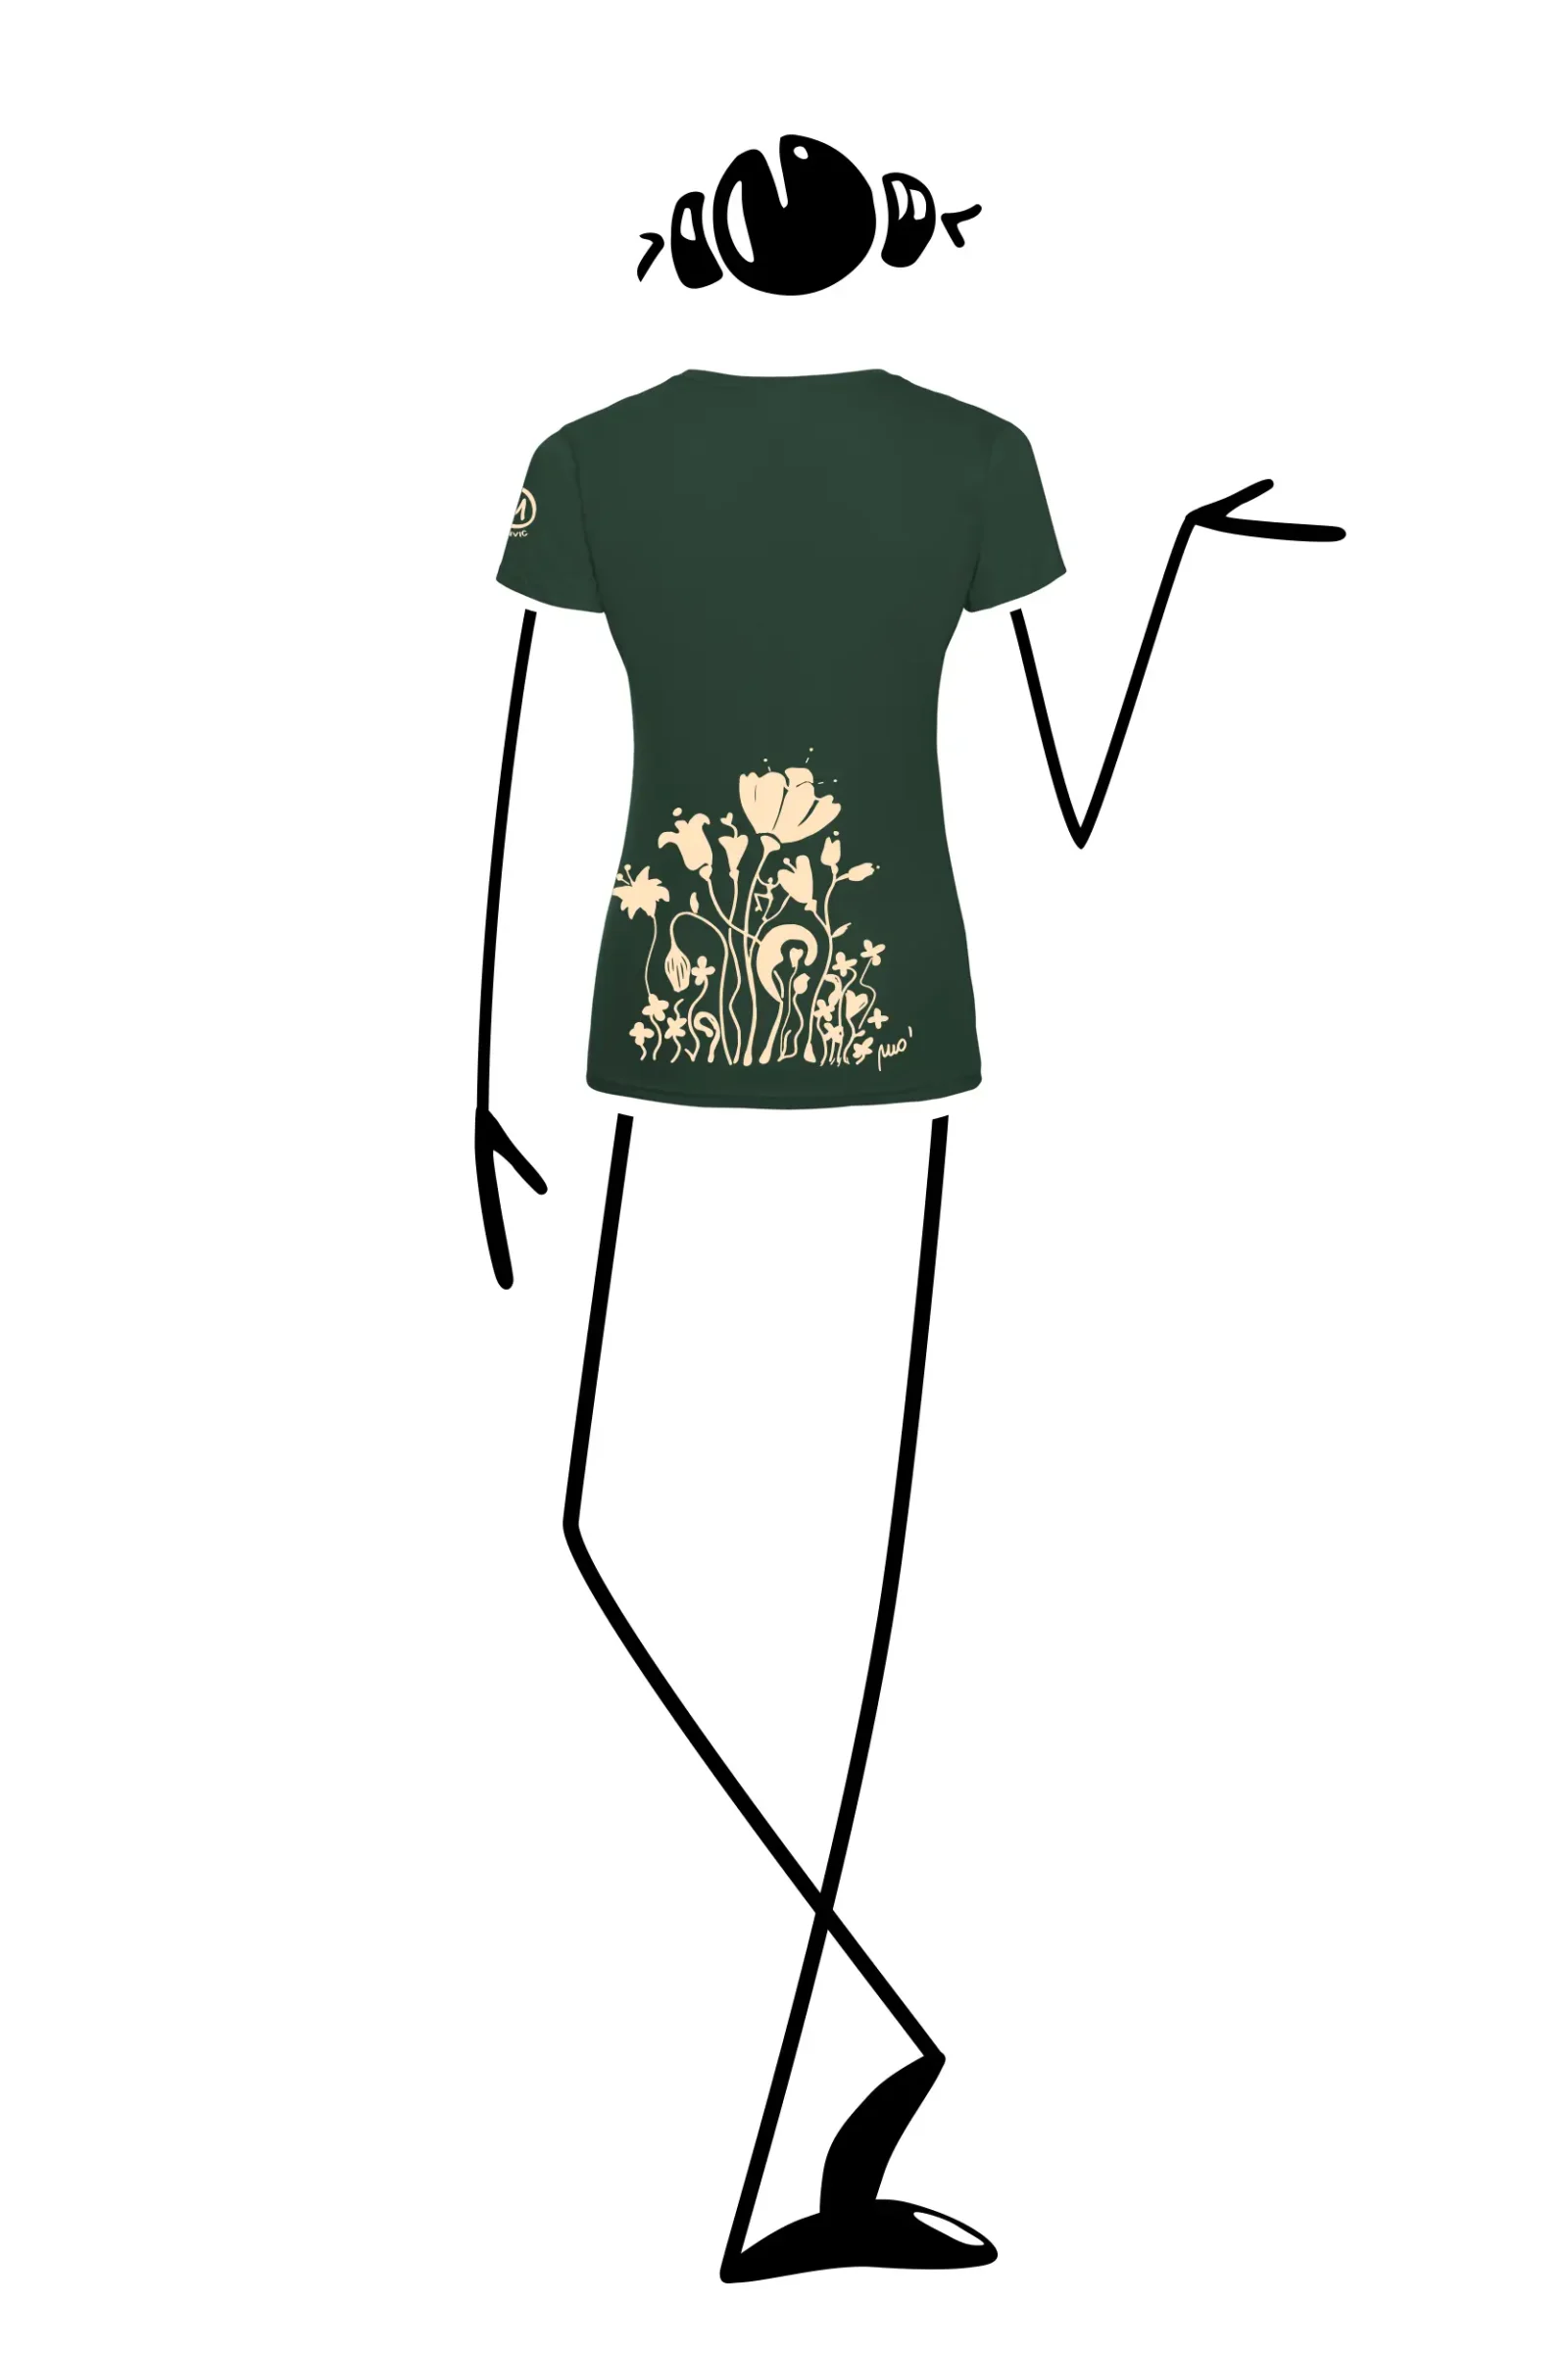 T-shirt arrampicata donna - cotone verde foresta - "Forest" SHARON MONVIC